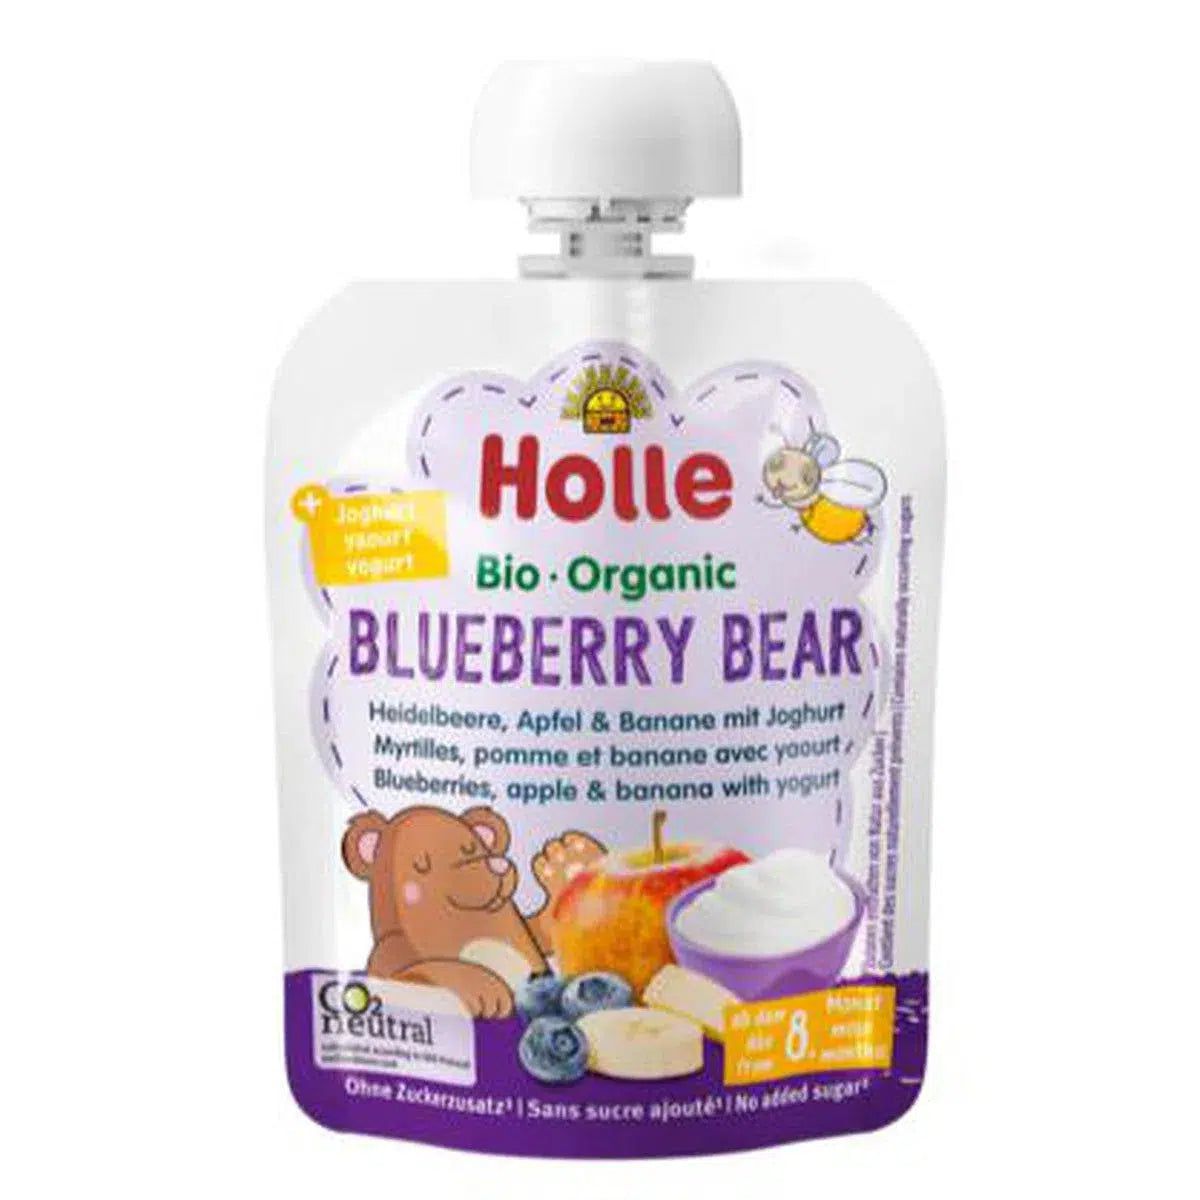 Holle Yogurt Blueberry Bear - Blueberry, Apple & Banana with Yogurt (85 g), from 8 months